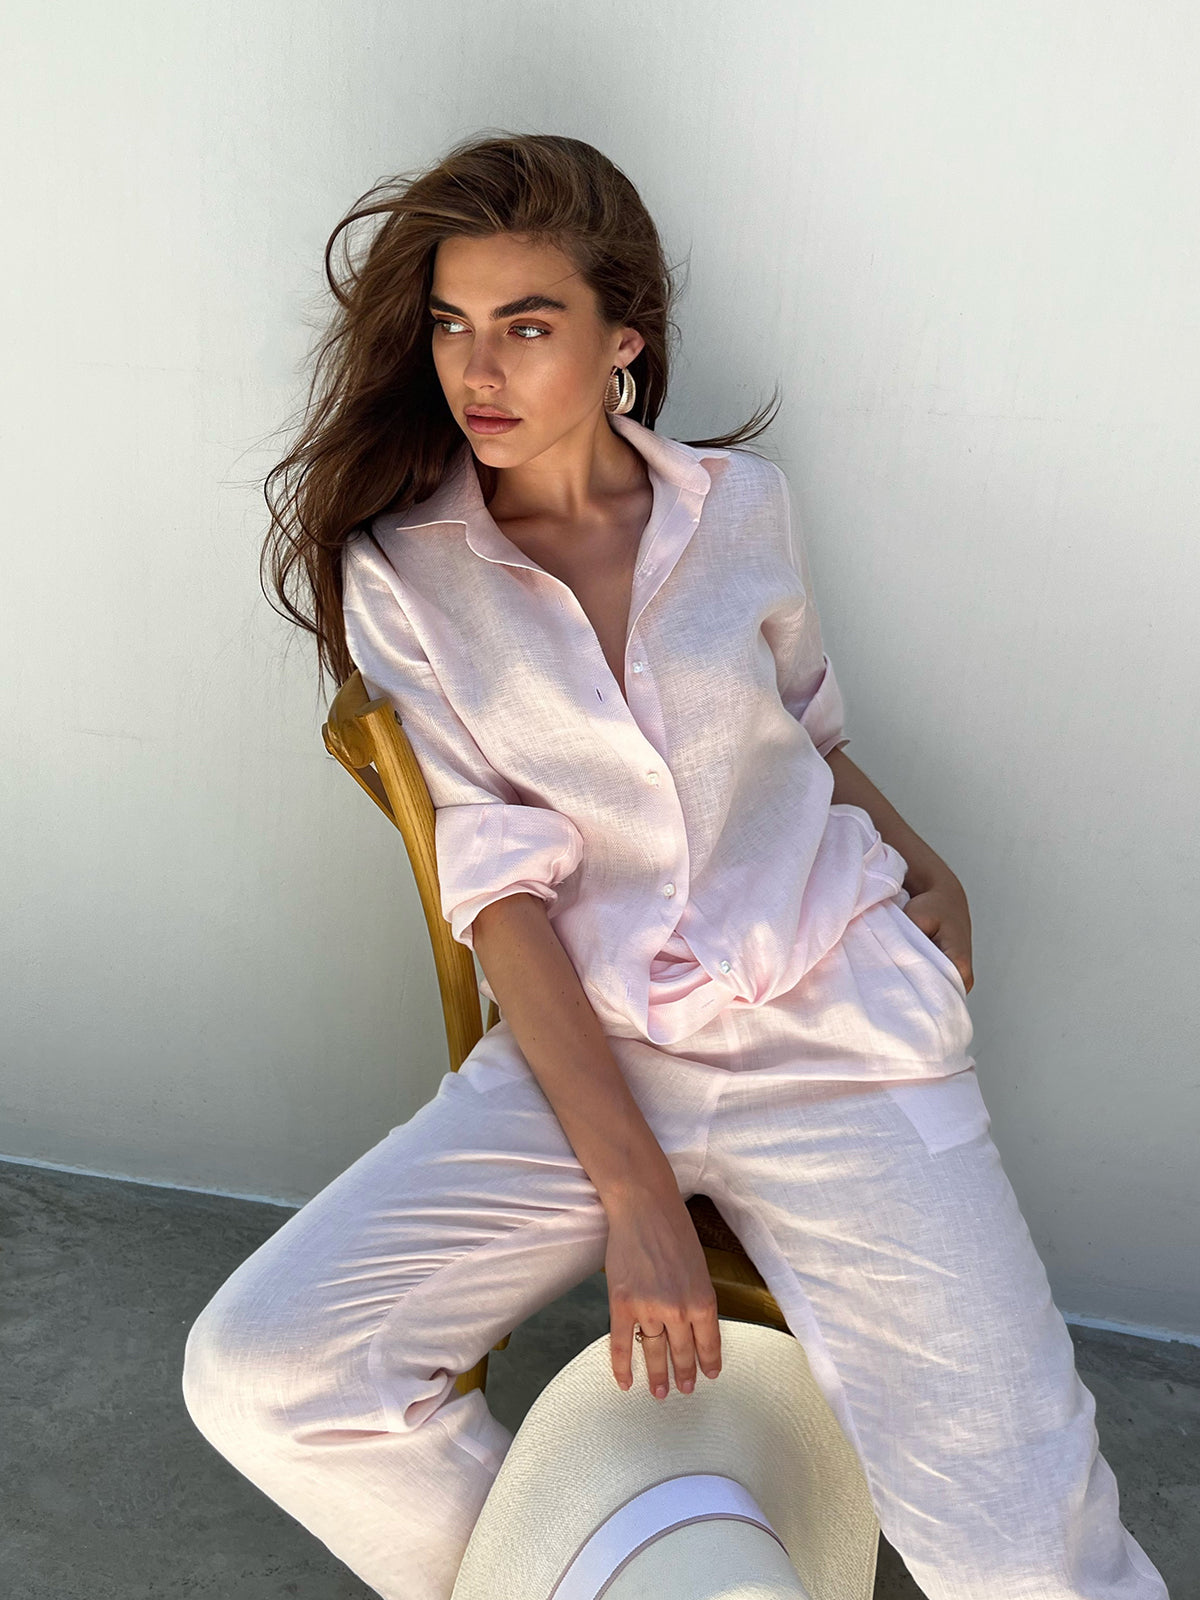 Camicia Chic Spigata 100% Capri pink linen shirt worn by model